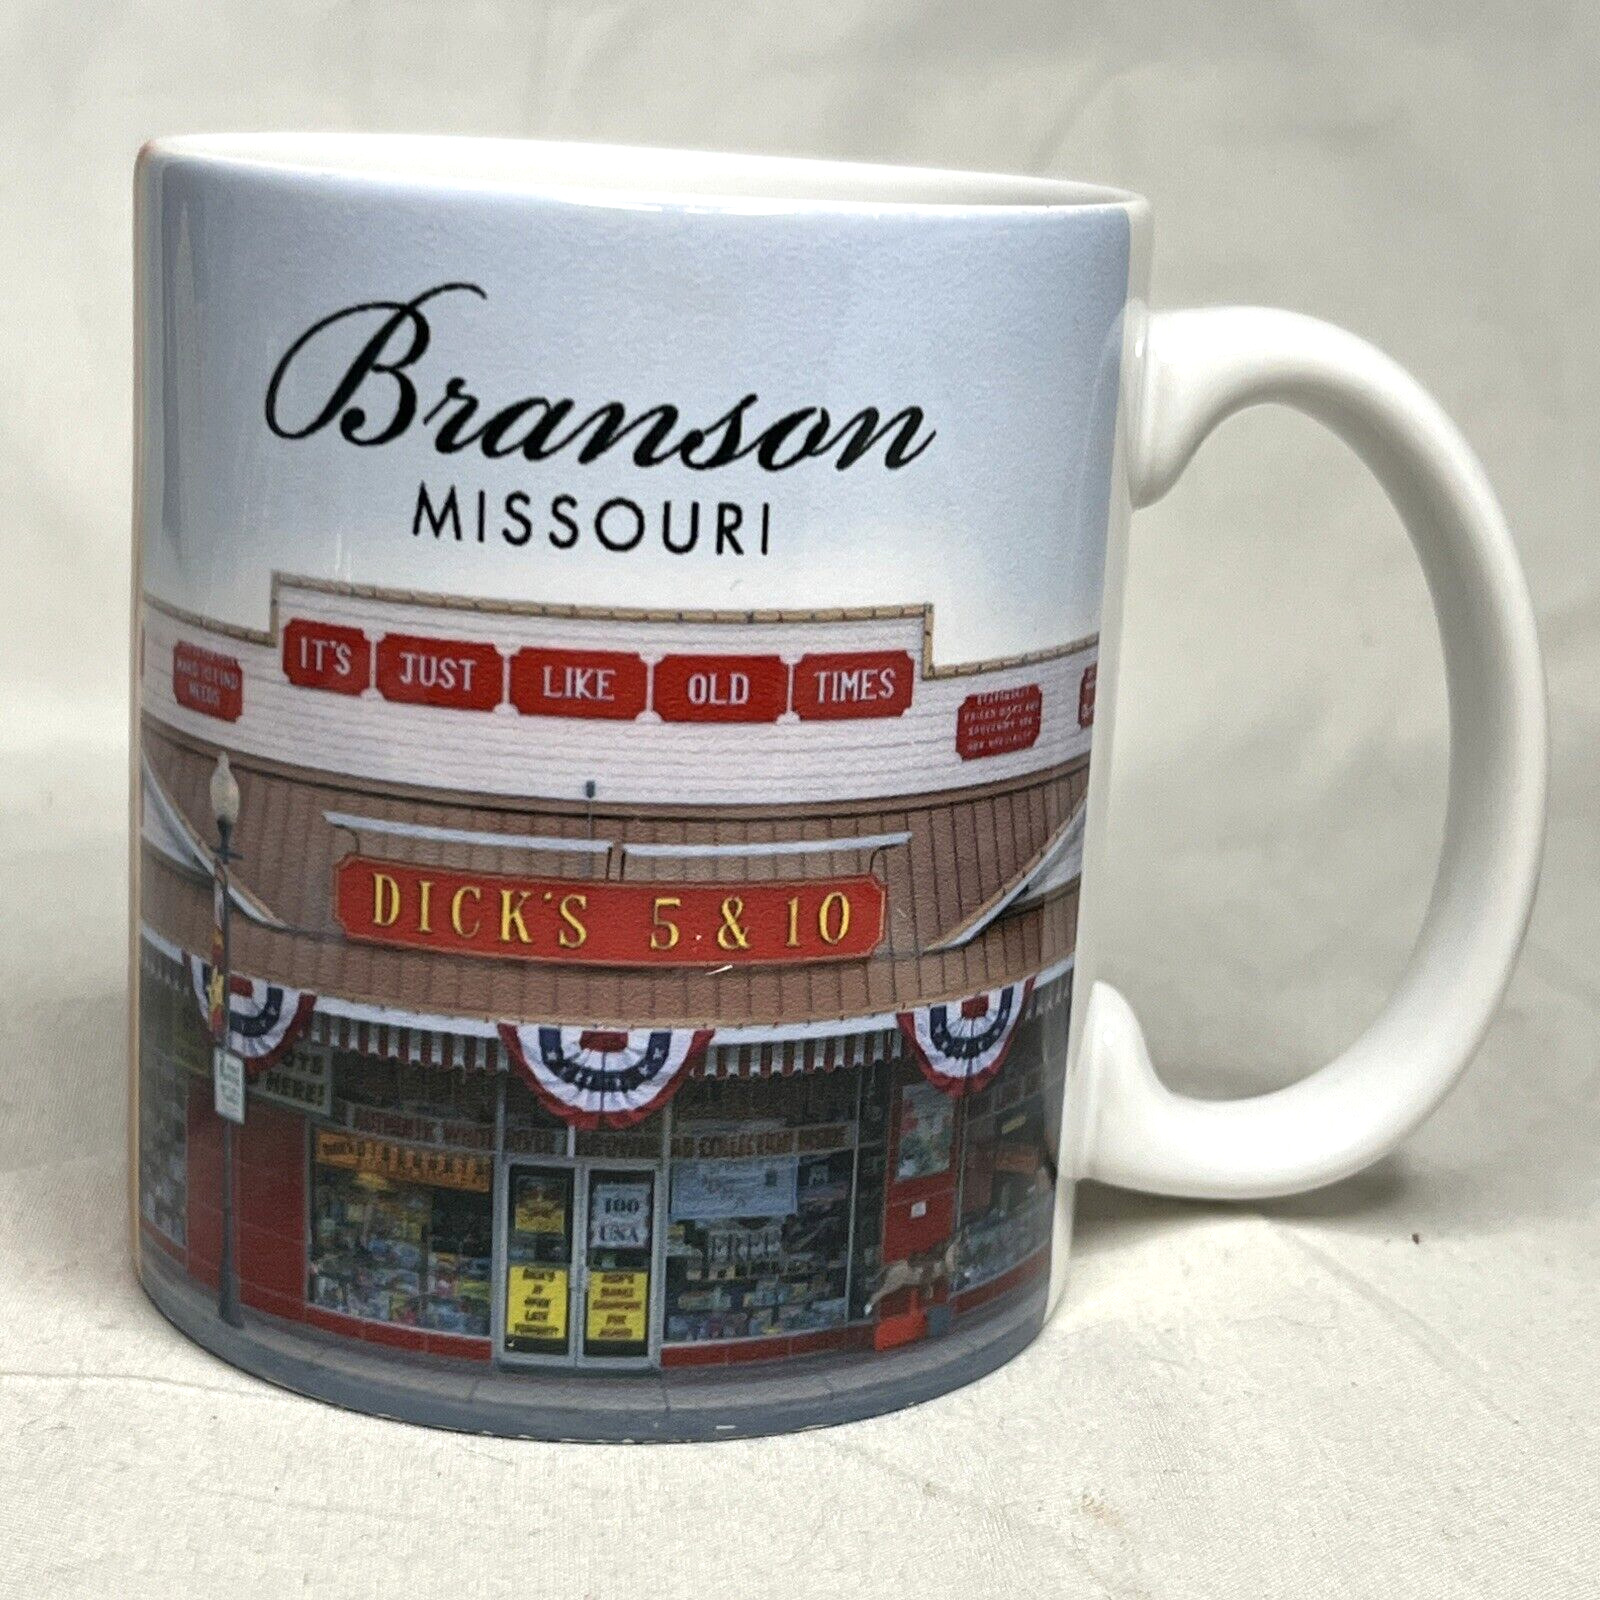 Branson Missouri Mug Dick’s 5 & 10 Storefront Travel Americana Ceramic 12 Oz